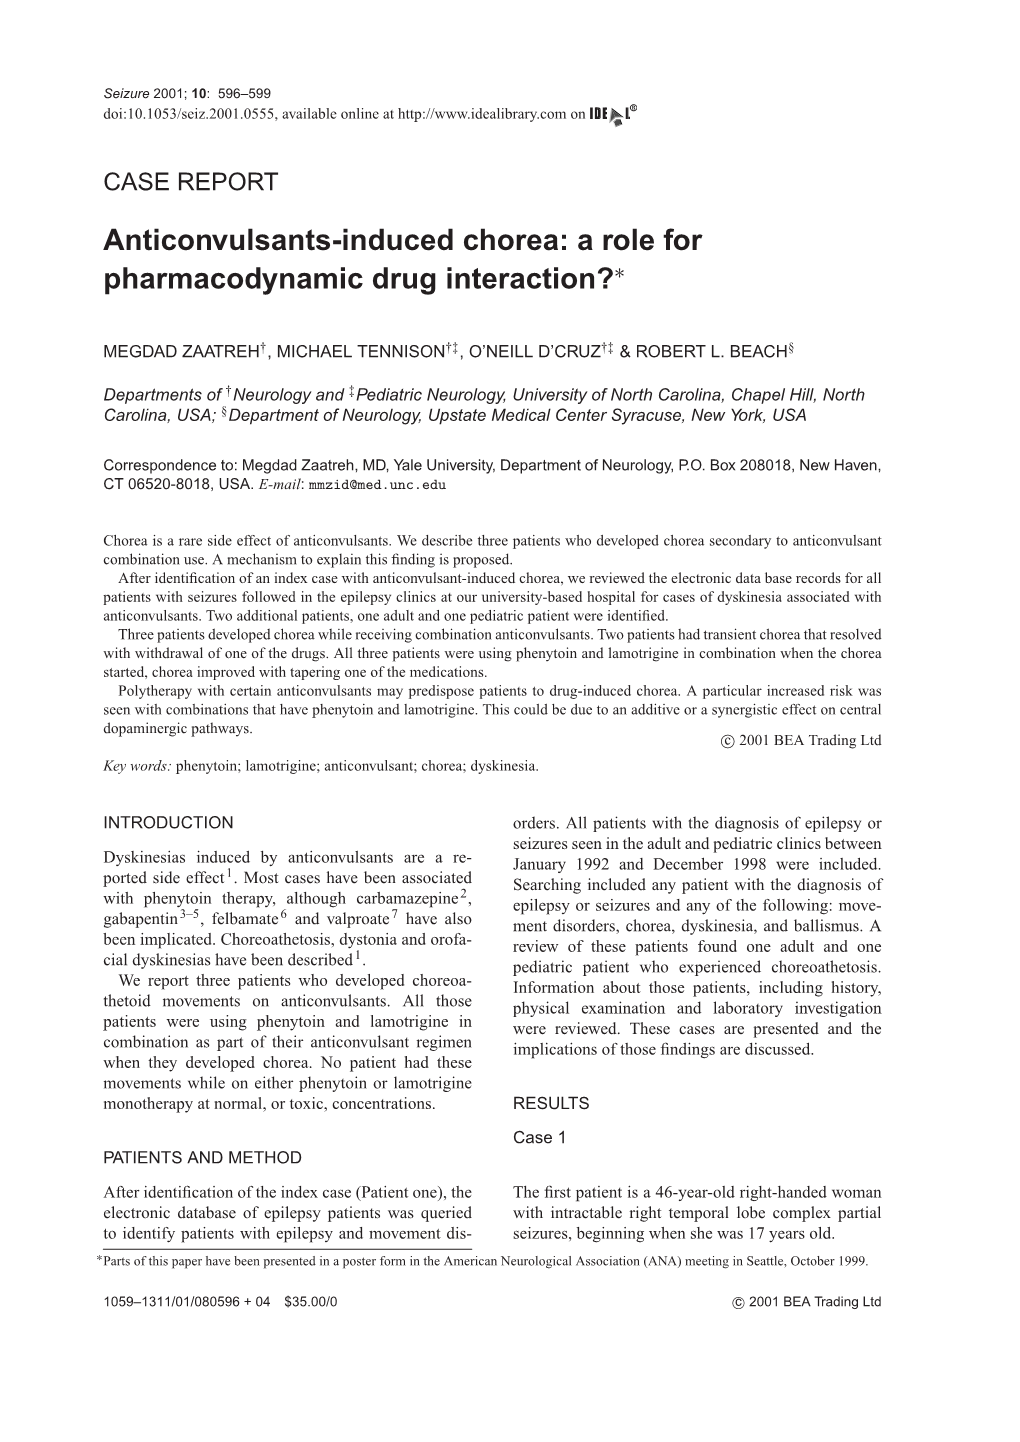 Anticonvulsants-Induced Chorea: a Role for Pharmacodynamic Drug Interaction?∗